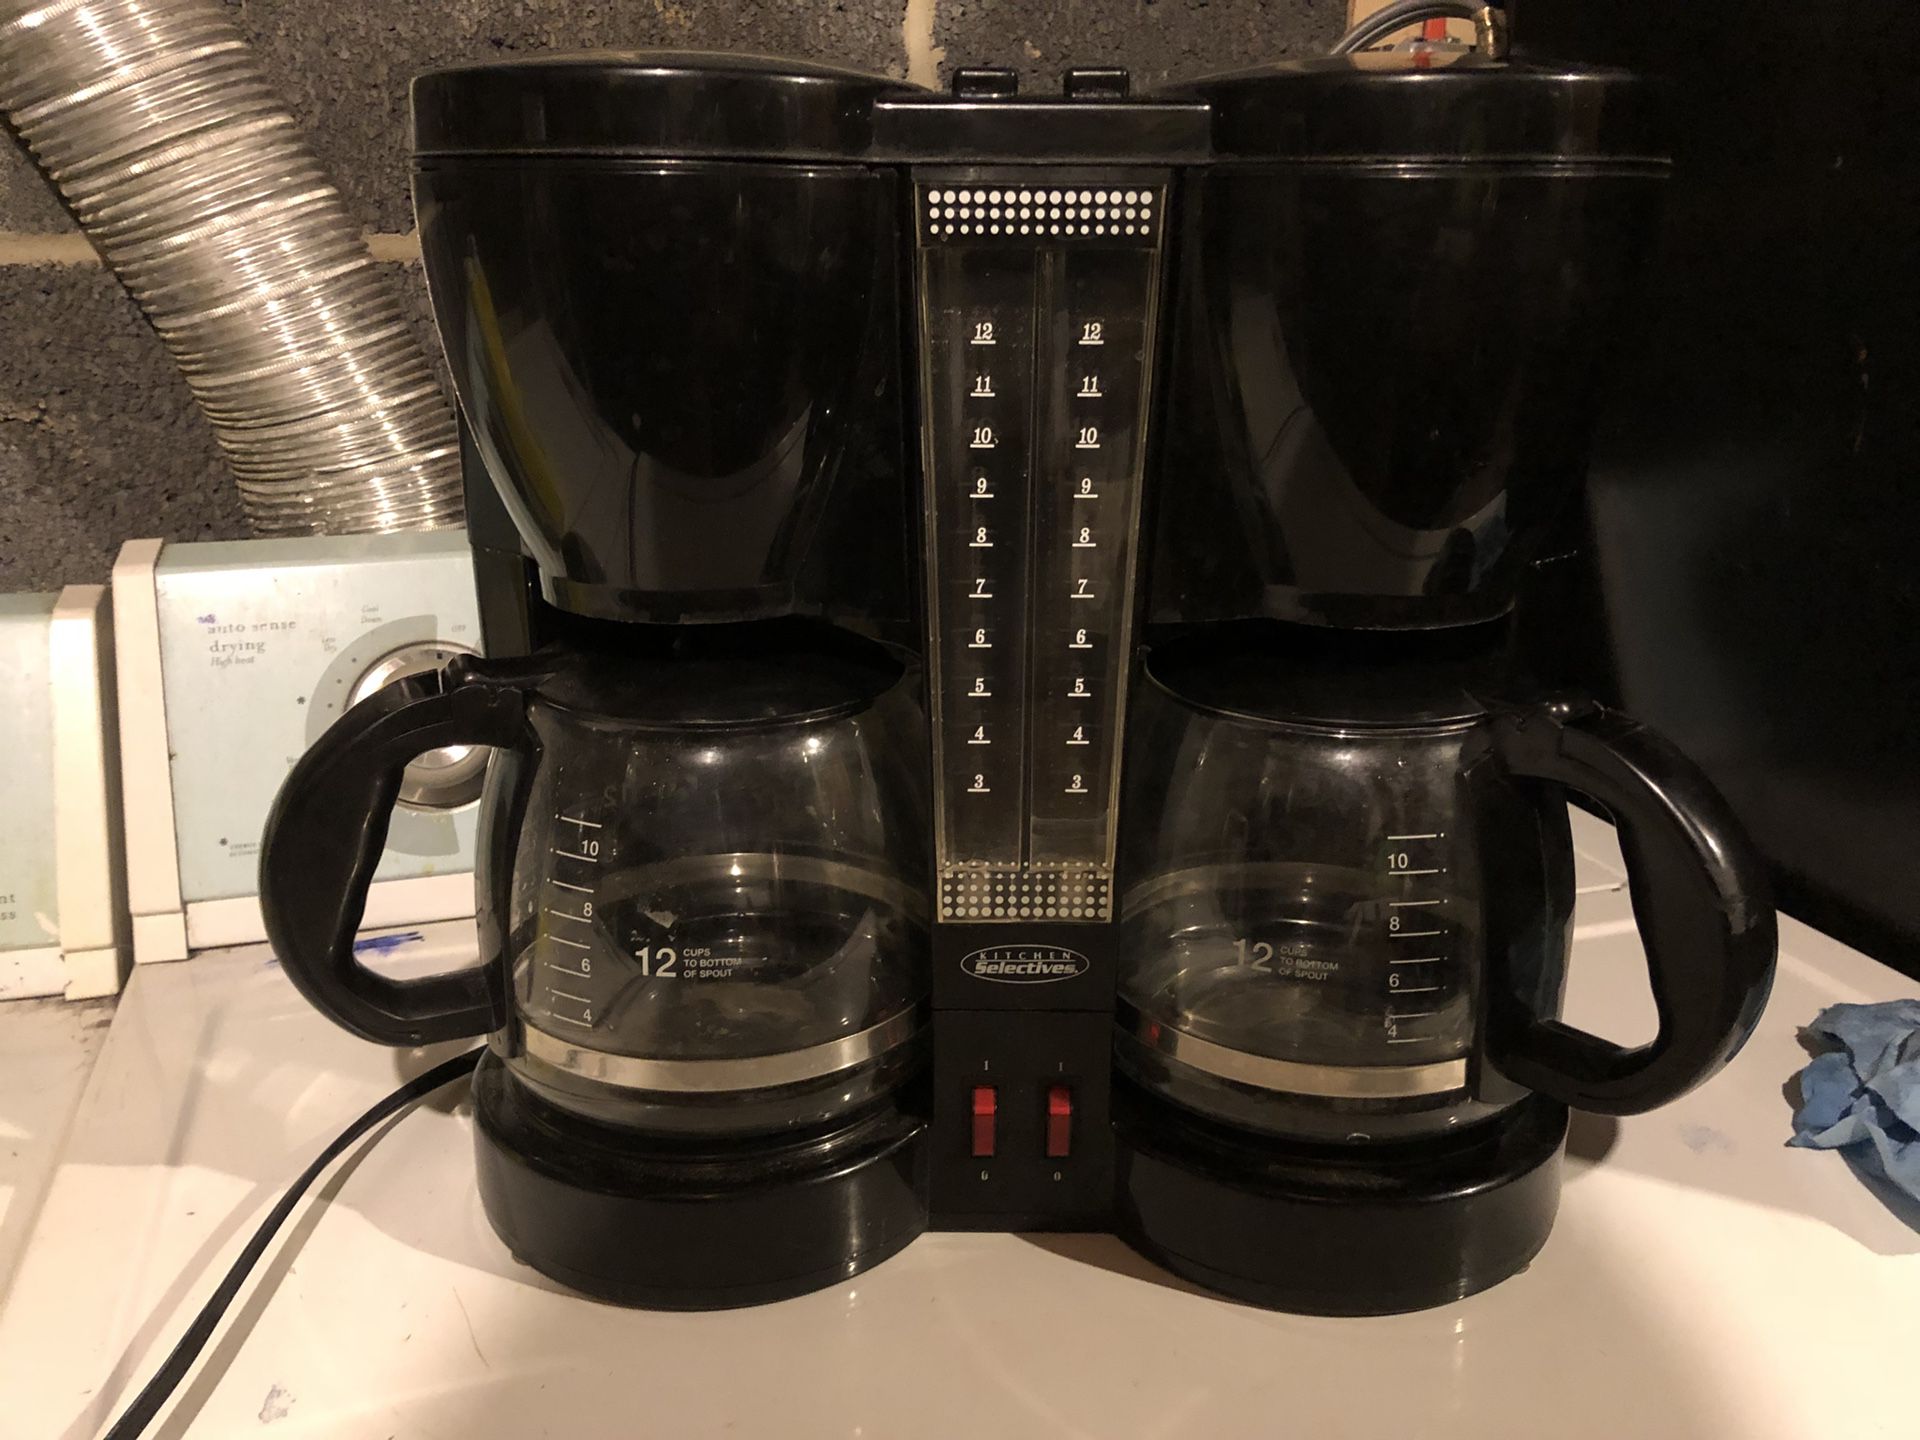 Double coffee maker